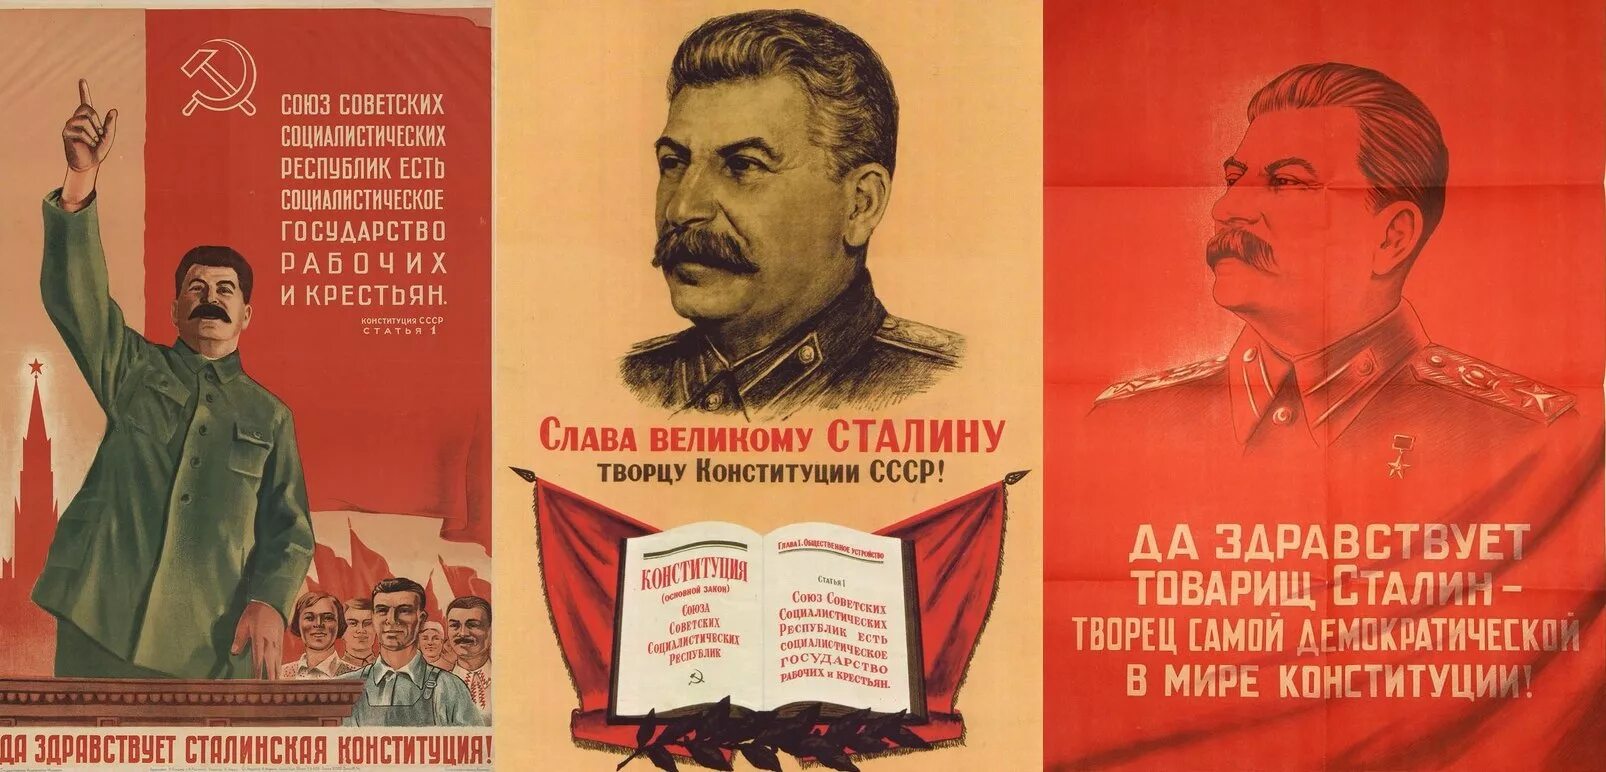 Сталинской называлась конституция. Конституция СССР 1936 года сталинская. Сталин и Конституция 1936. Сталинская Конституция 1936 года плакат. Сталин о Конституции 1936 года.